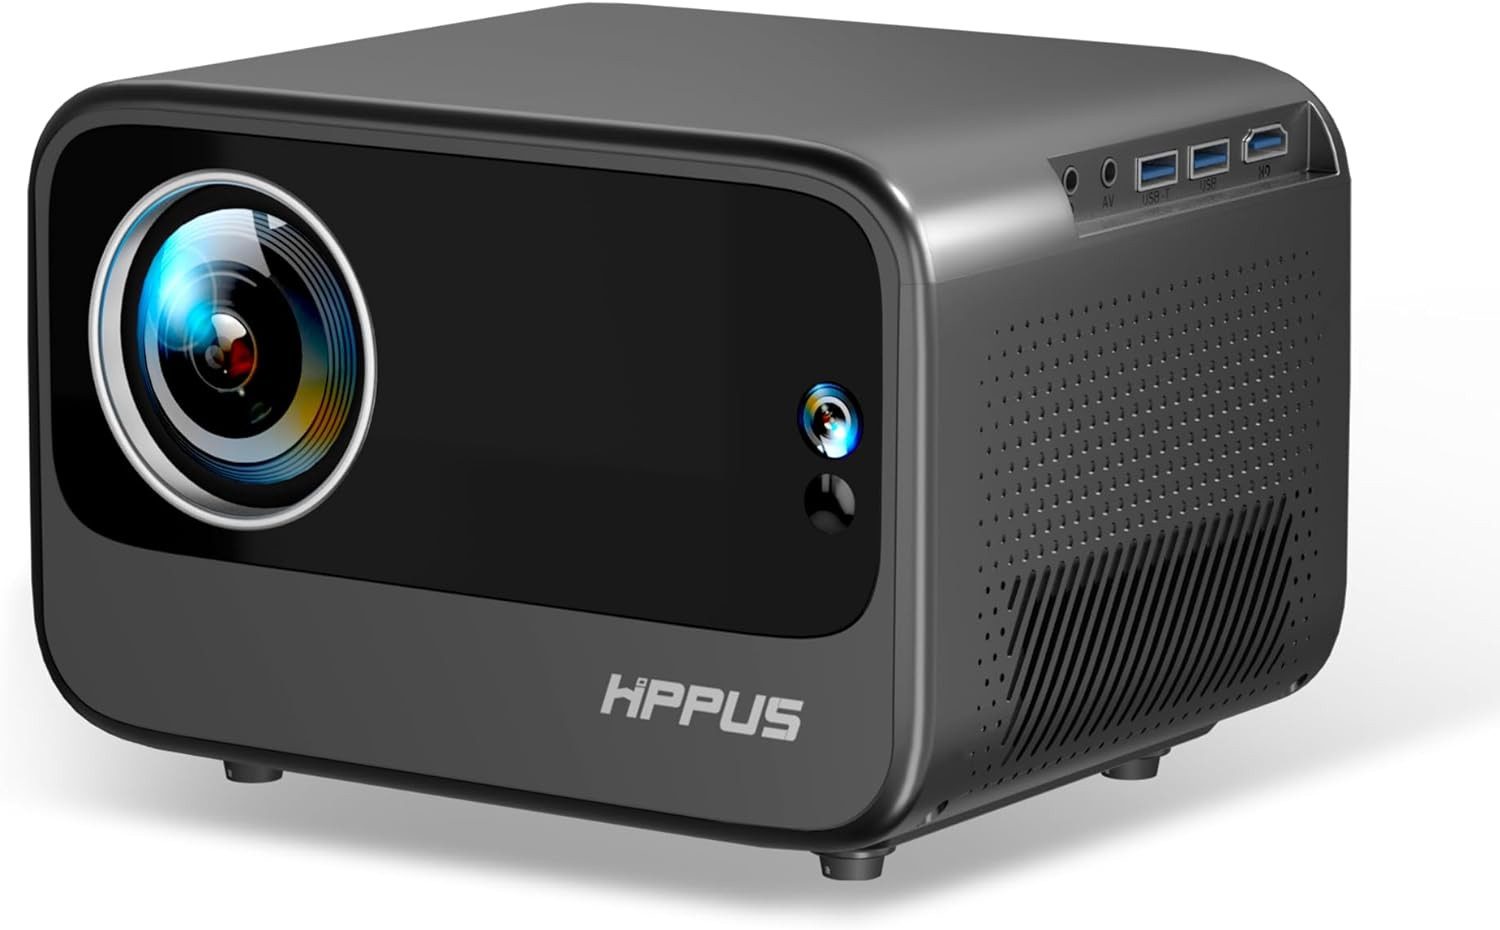 HIPPUS Auto Fokus/Keystone Outdoor Smart Portabler Projektor (1920*1080 px, mit eingebauten 8000+ Apps, Heim Projektor 300